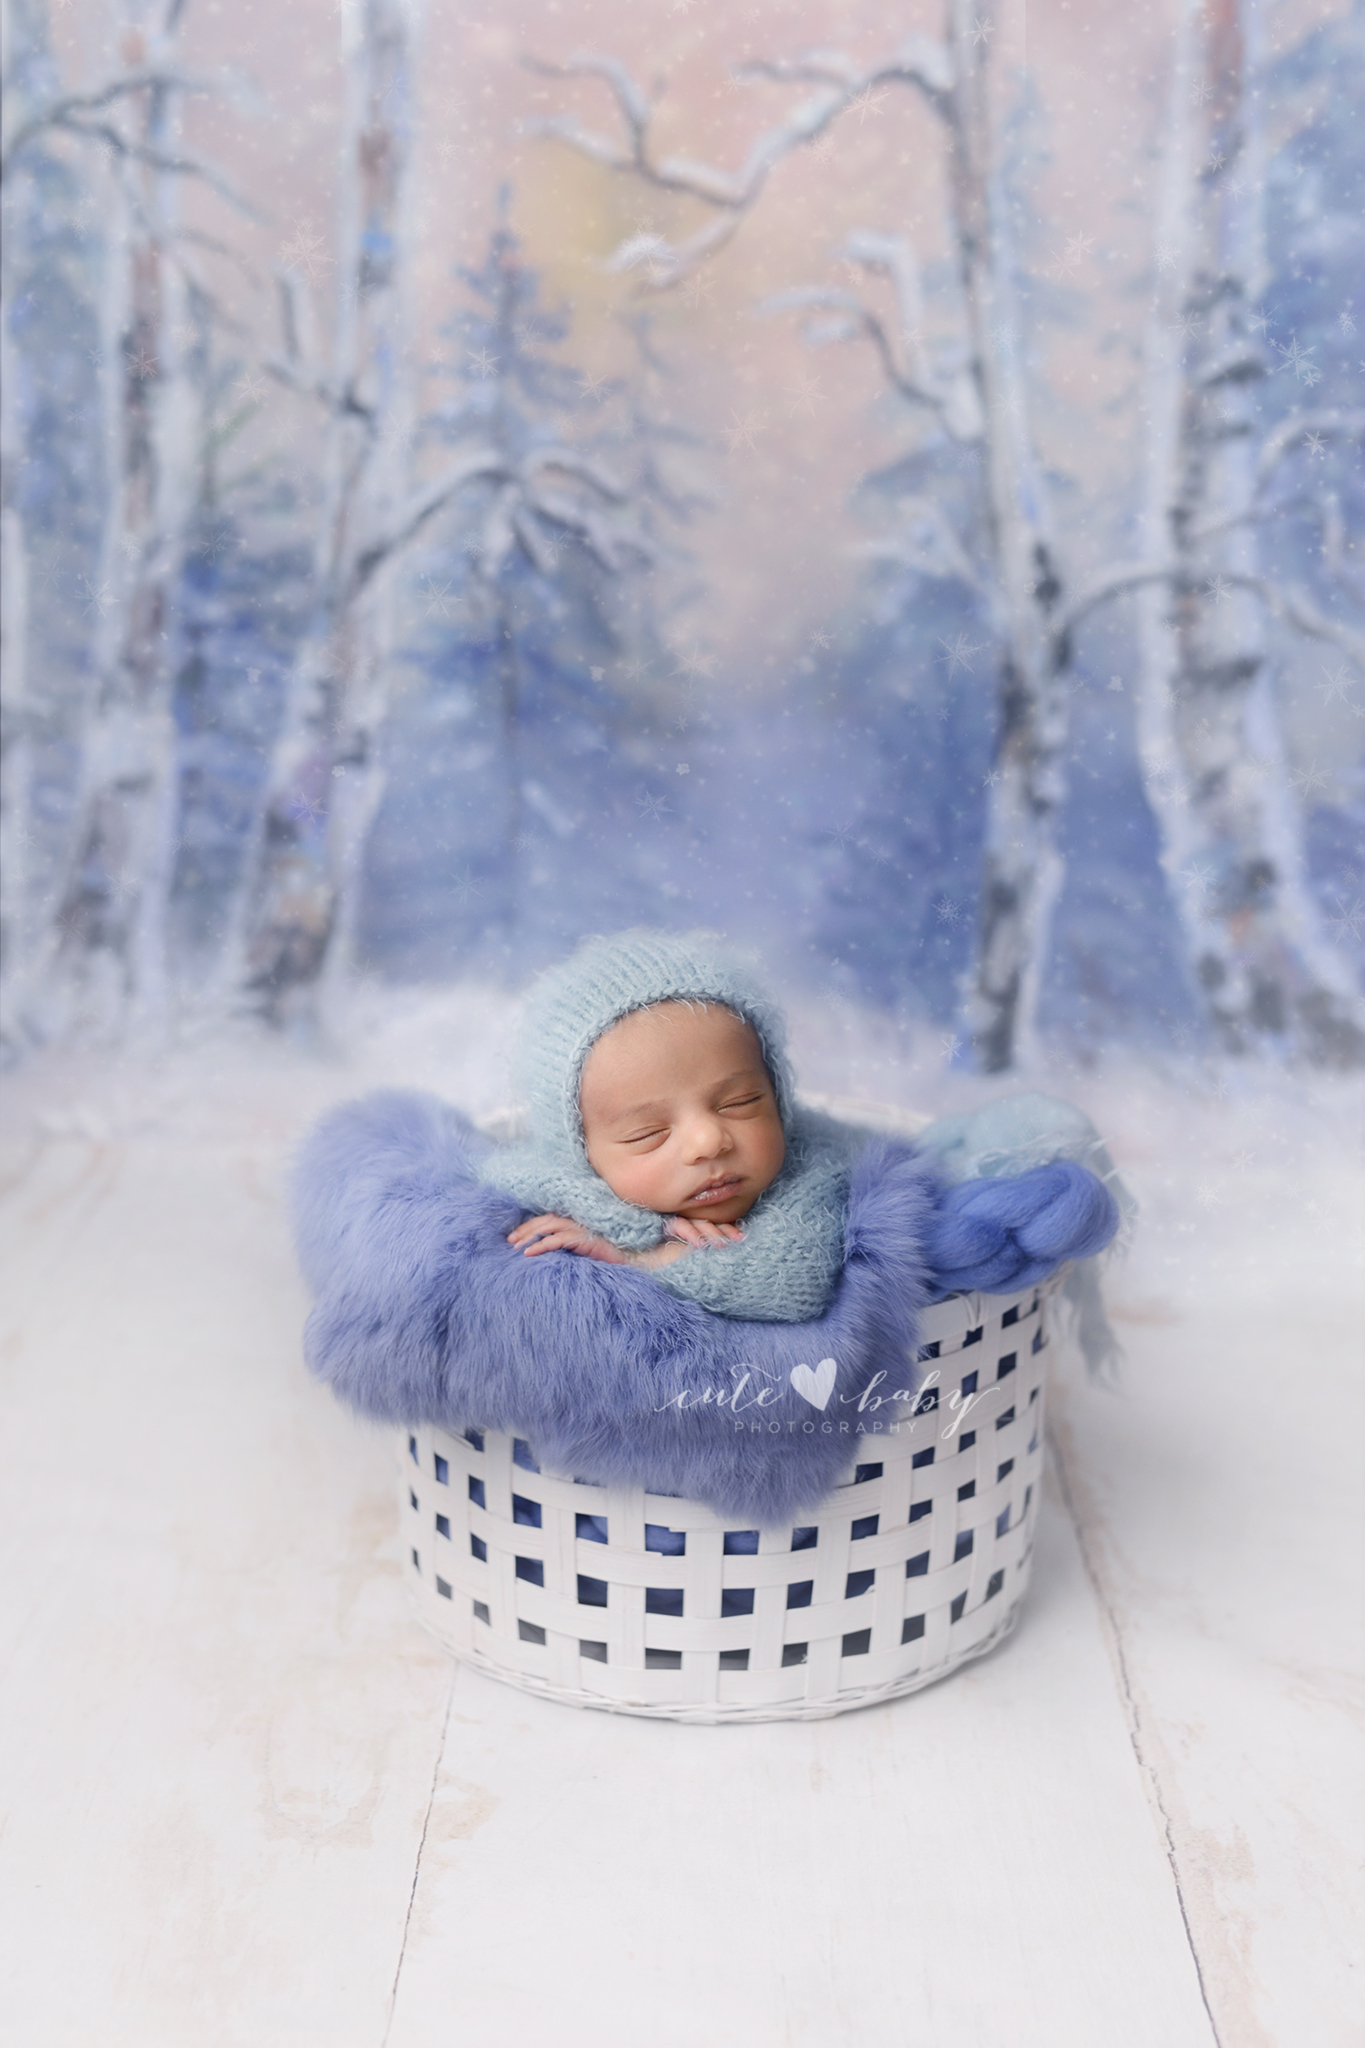 newborn photography manchester, aneta gancarz, baby portrait manchester, cute baby photography